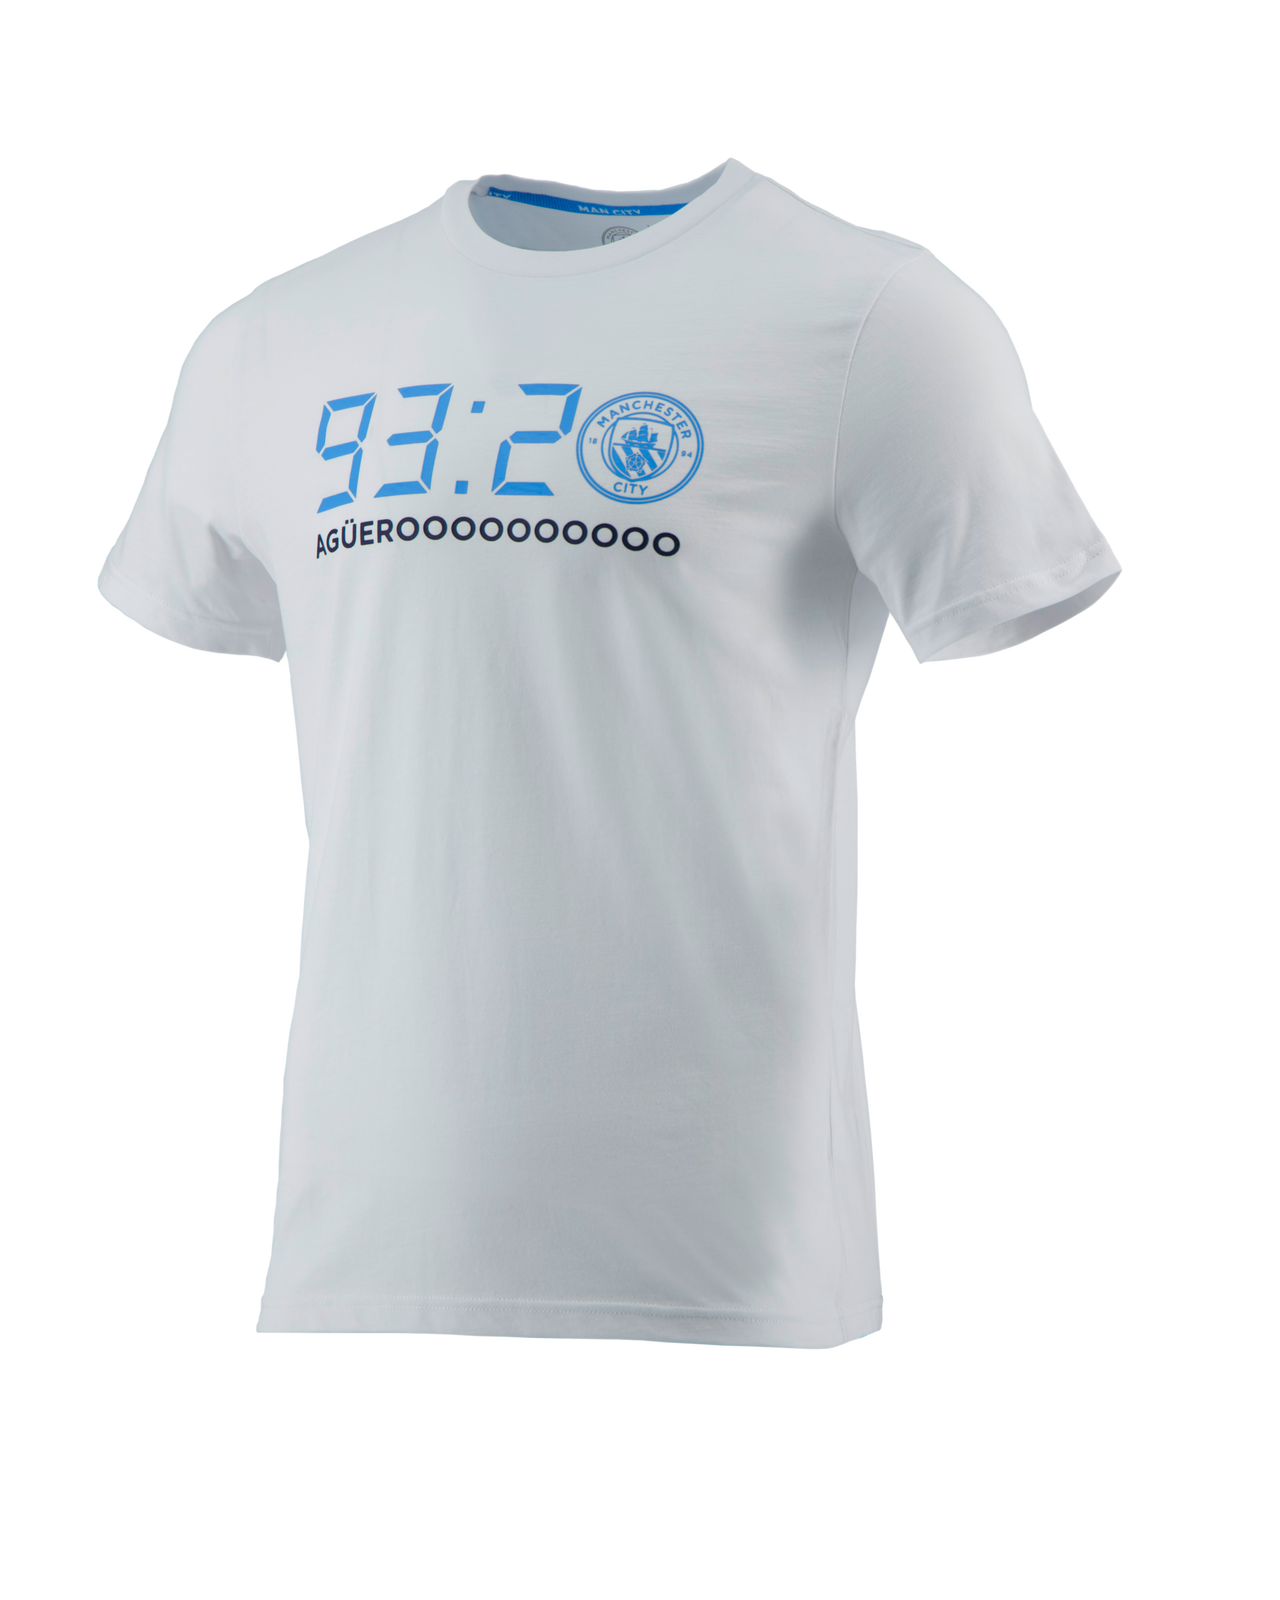 Camiseta Manchester City 93:20 Agüero